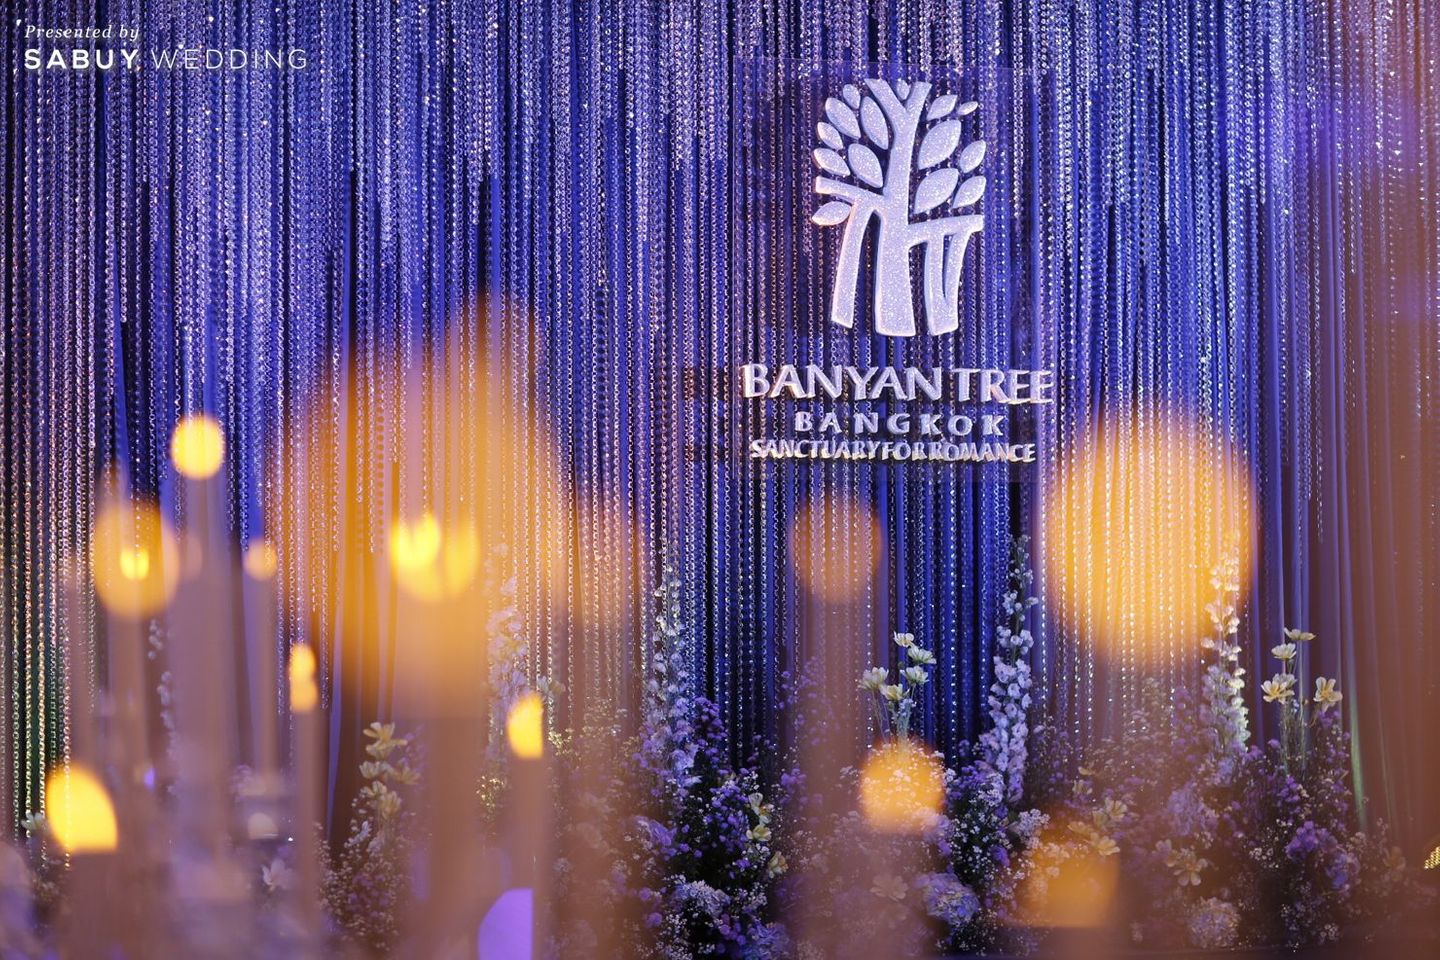 undefined Banyan Tree Wedding Showcase 2018 อบอวลกลิ่นอายความโรแมนติก กับวิวมุมสูงที่สวยที่สุดในกรุงเทพฯ